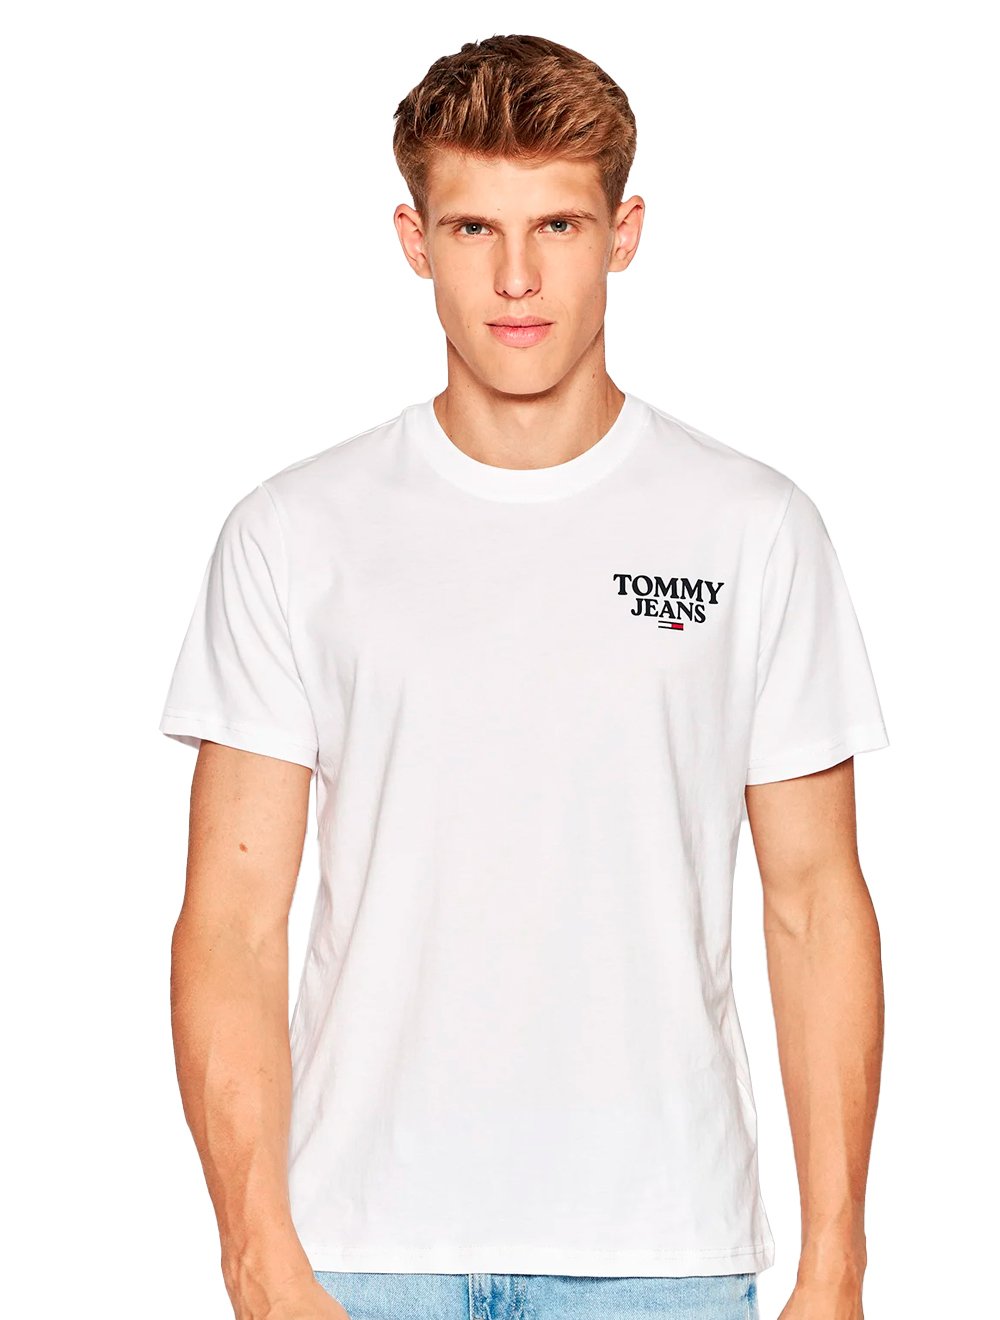 Camiseta Tommy Jeans Masculina Chest Entry Logo Branca